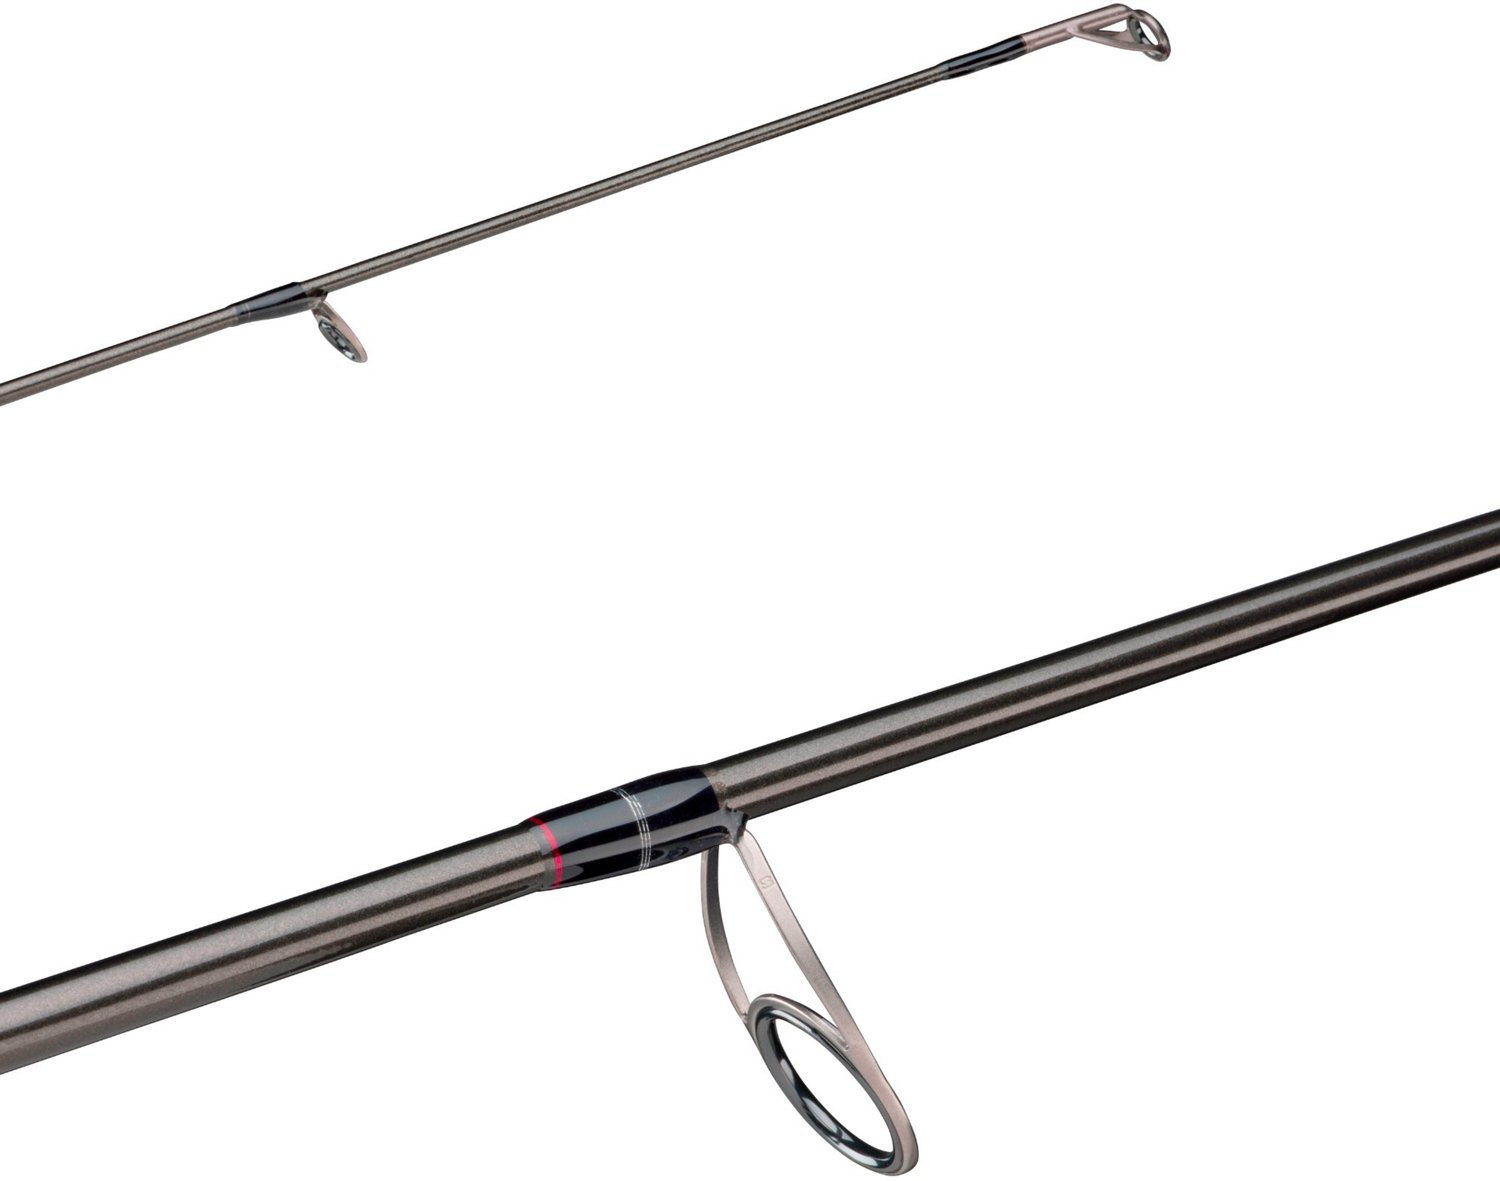  Fenwick HMX Spinning Fishing Rod, 7' - Medium Light - 1 pc,  Multi : Sports & Outdoors